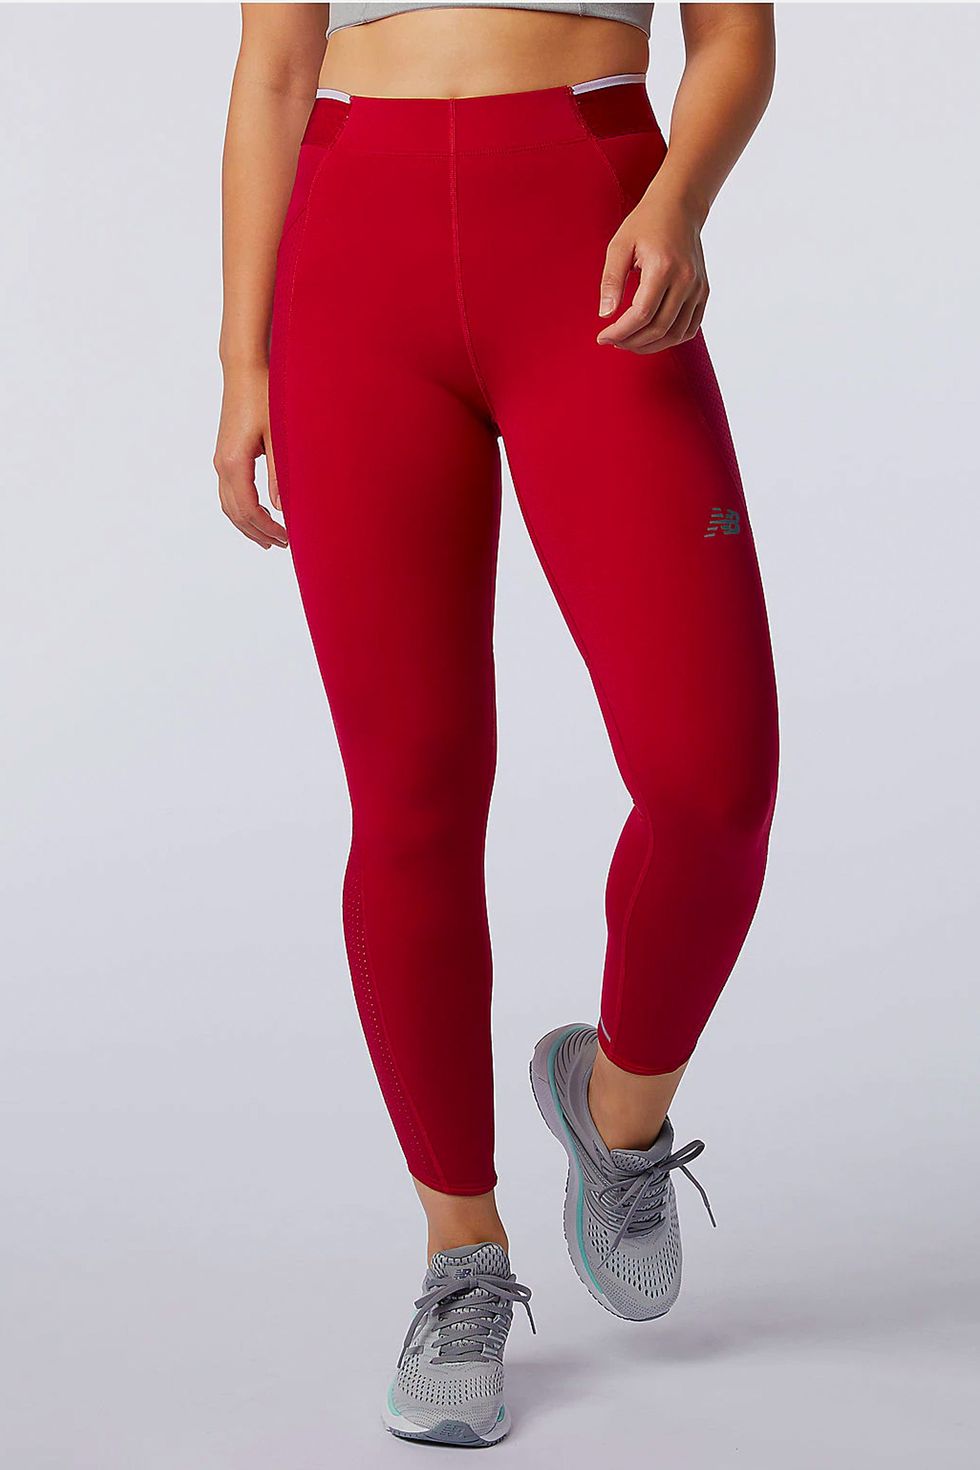 New Balance Soft Size S Heather Gray Black Legging Capris Pants Yoga NB Dry